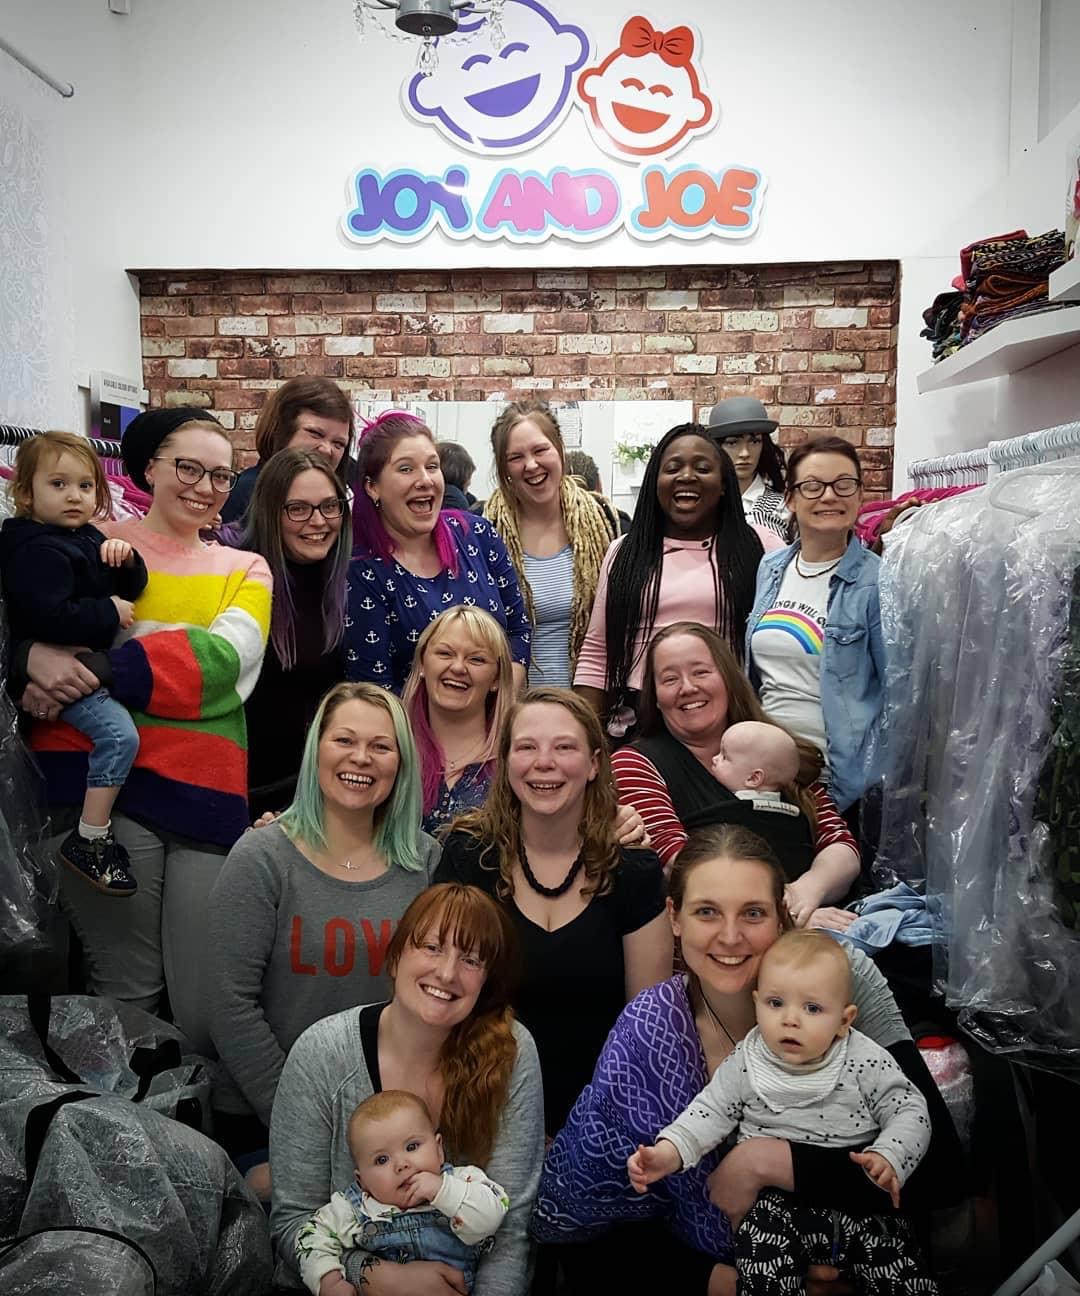 Hug of Slingababy consultants at Joy and Joe’s HQ